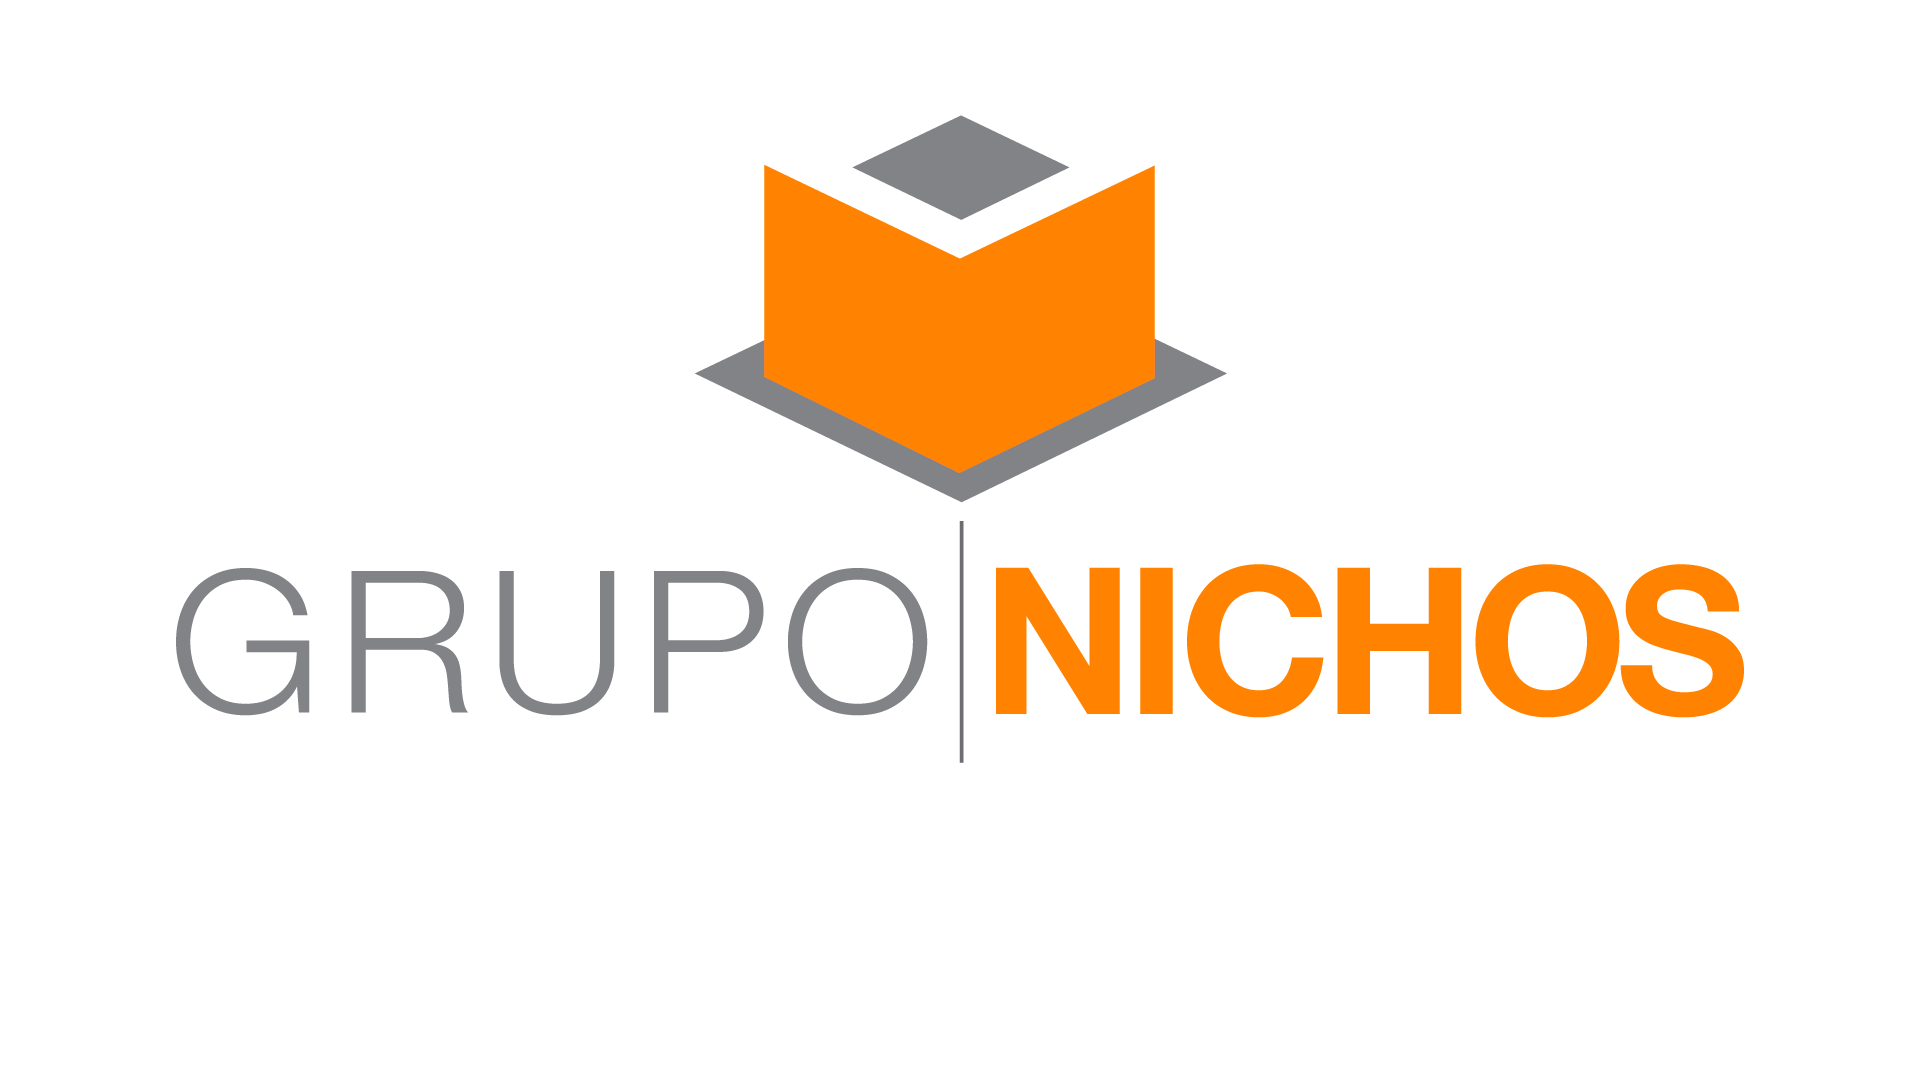 Grupo Nichos Nubosoft Google Cloud & Google workspace